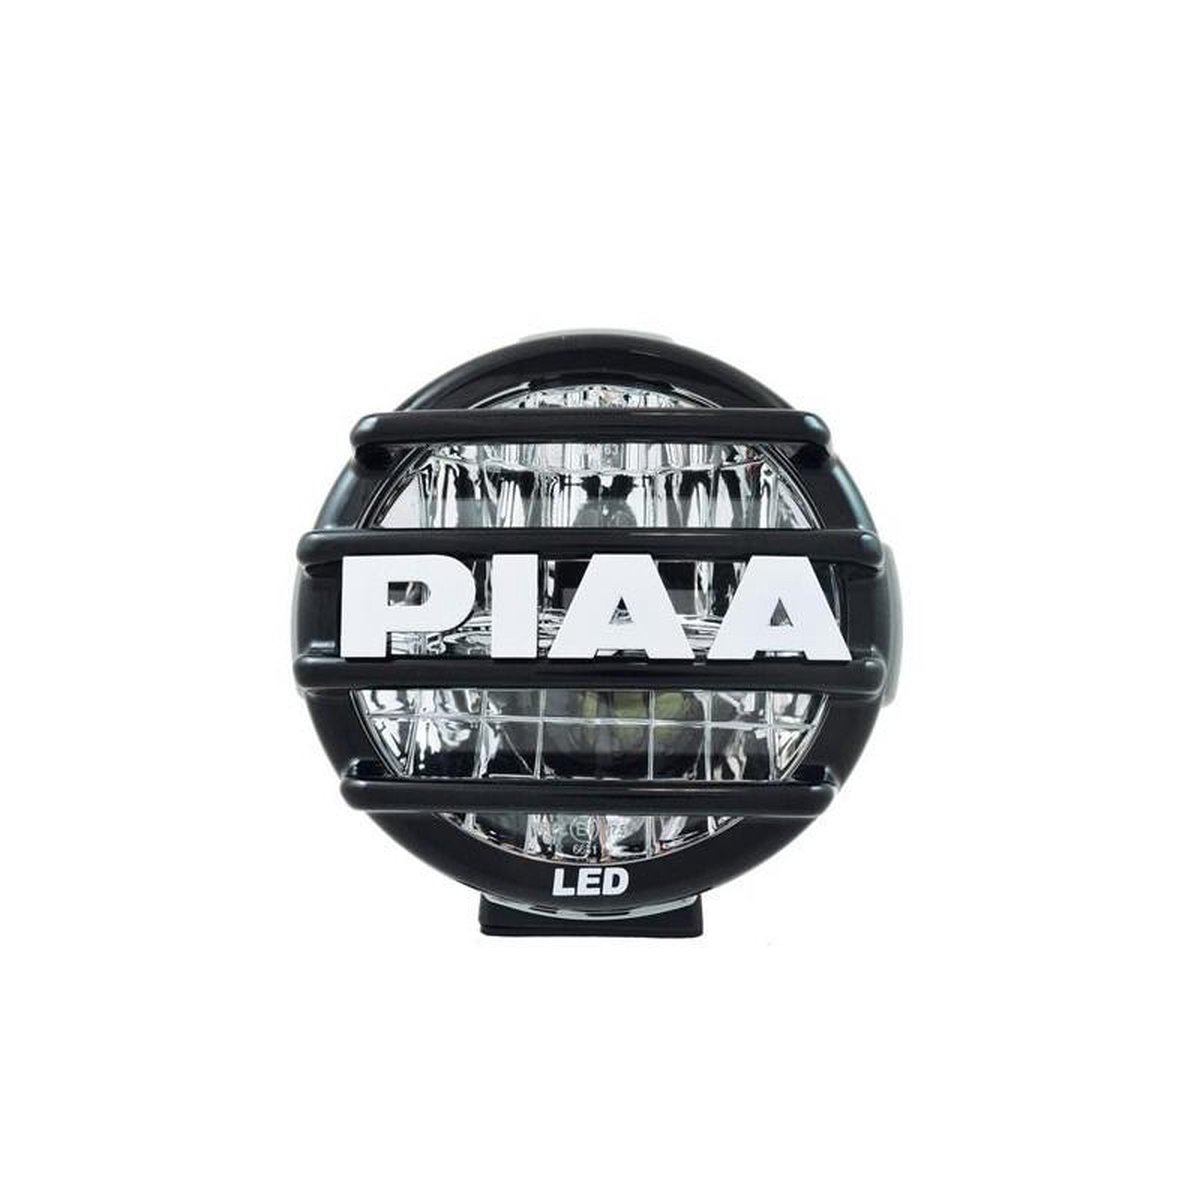 PIAA LP570 SET LED verstralers - driving - auto verlichting - 12-24 volt